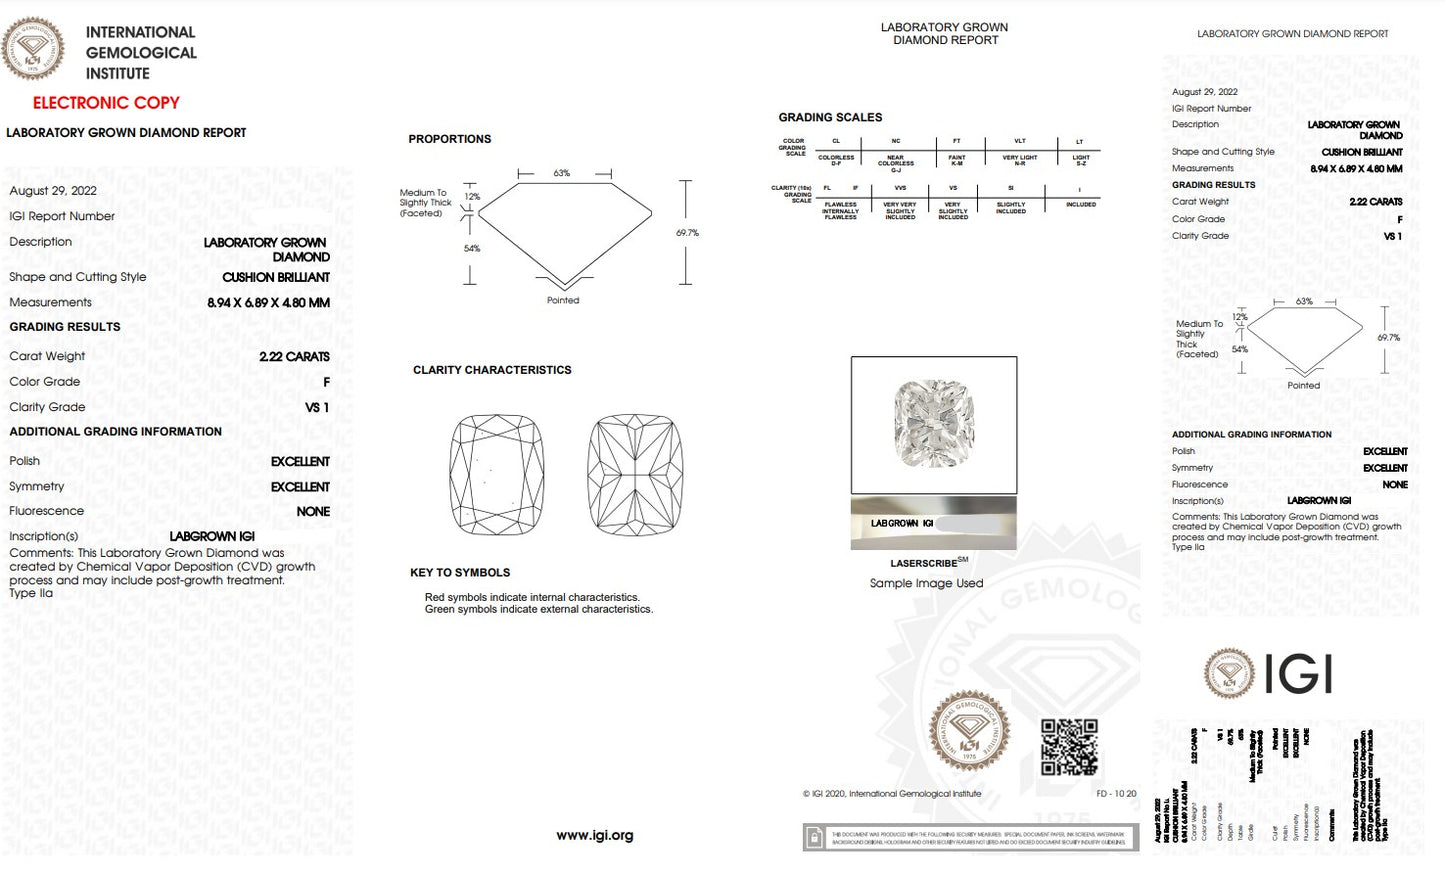 2.22 Carat Lab Created Cushion Diamond Engagement Ring with Halo - Happy Jewelers Fine Jewelry Lifetime Warranty